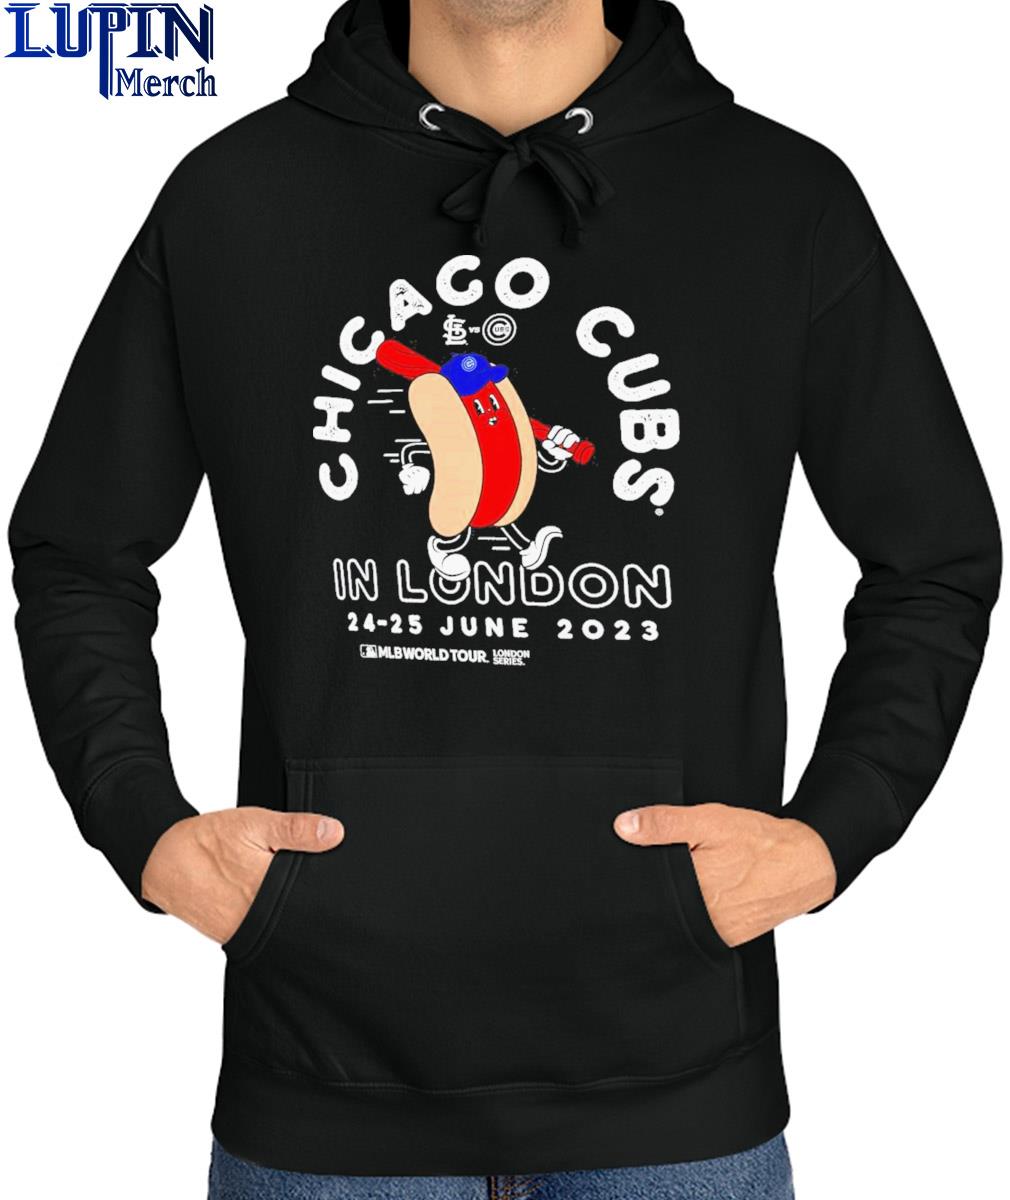 Chicago Cubs 2023 Mlb World Tour London Series City Dog Shirt